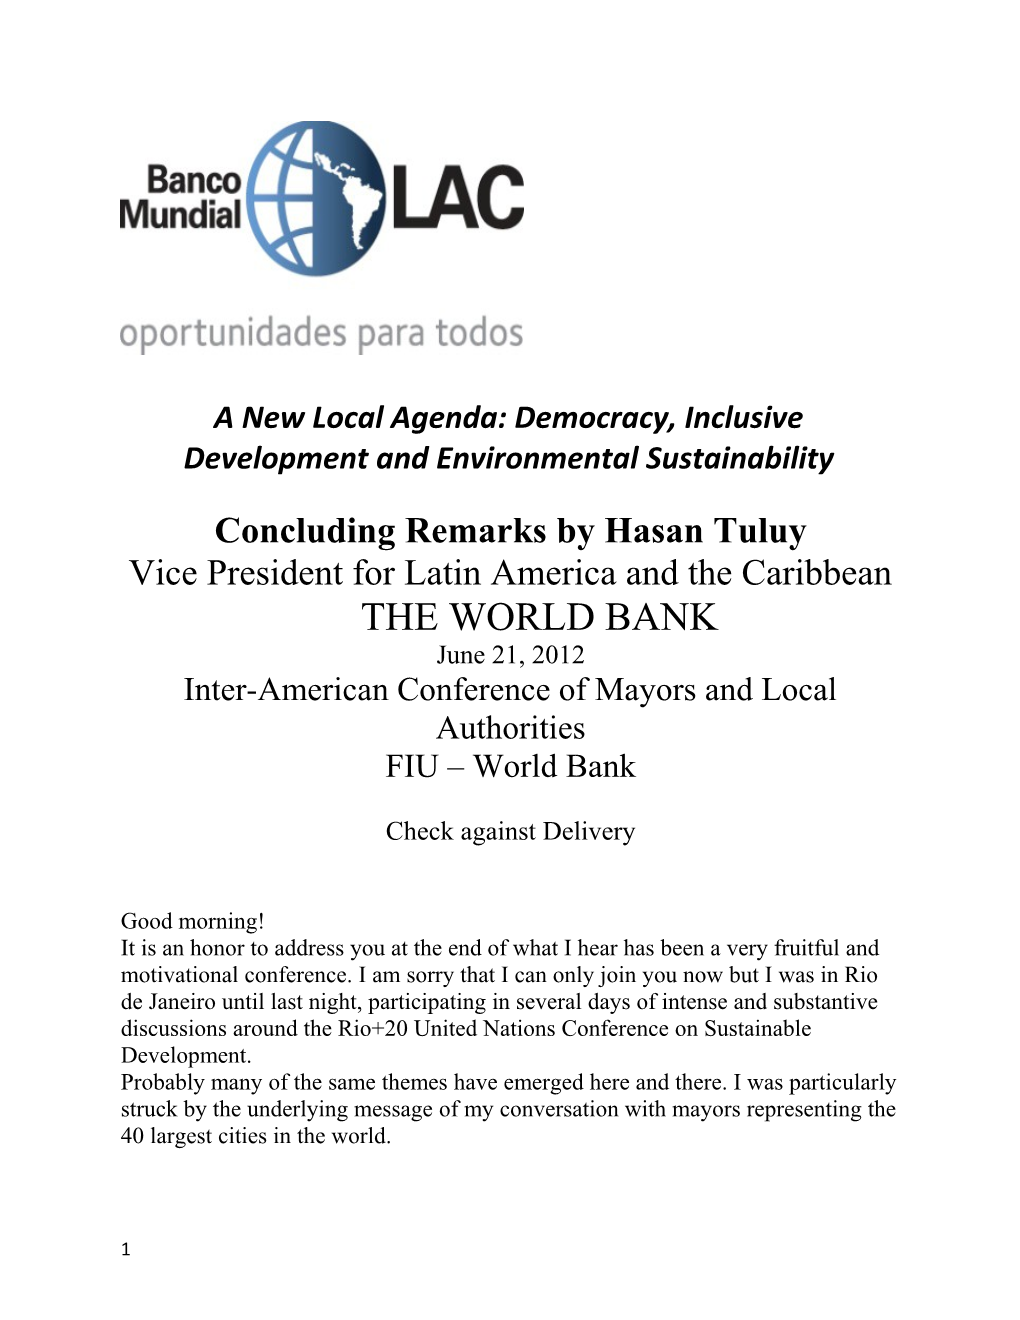 A New Local Agenda: Democracy, Inclusive Development and Environmental Sustainability